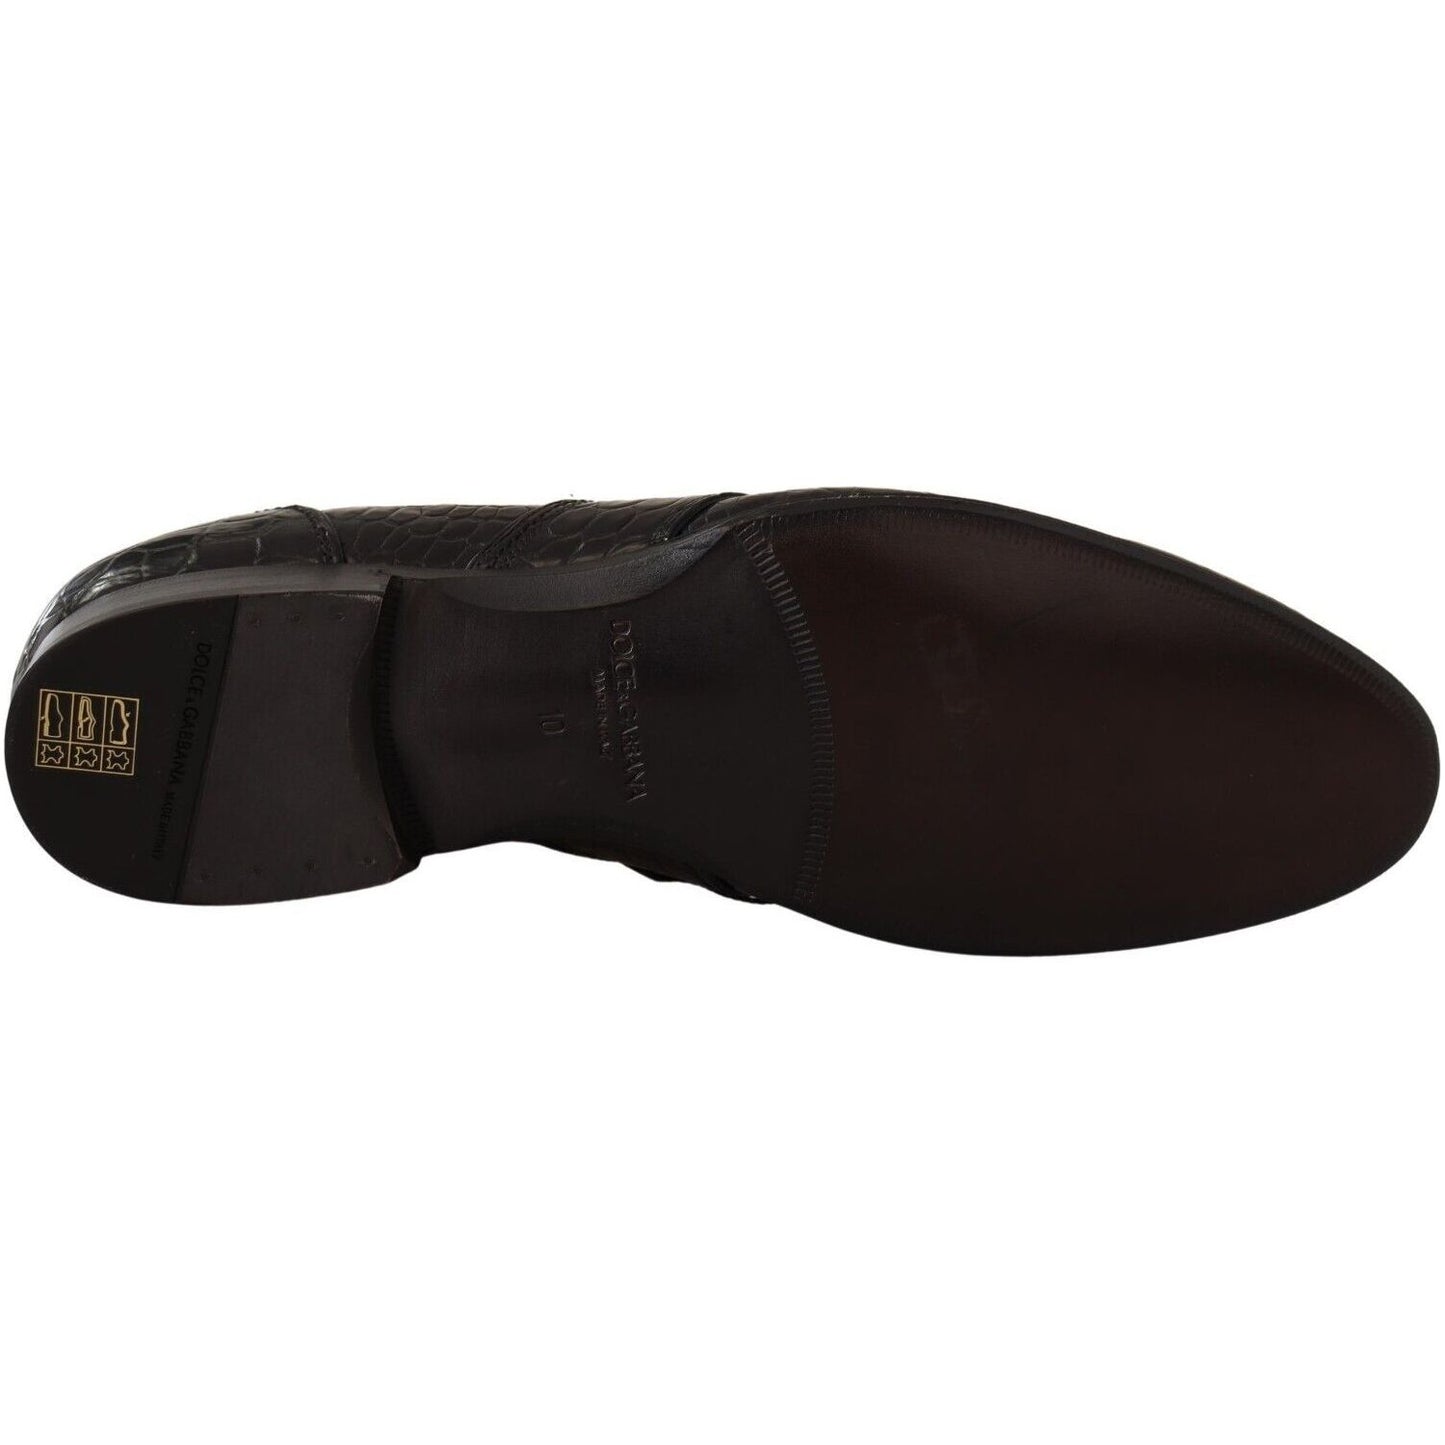 Dolce & Gabbana Elegant Crocodile Leather Moccasin Shoes black-crocodile-leather-slip-on-moccasin-shoes